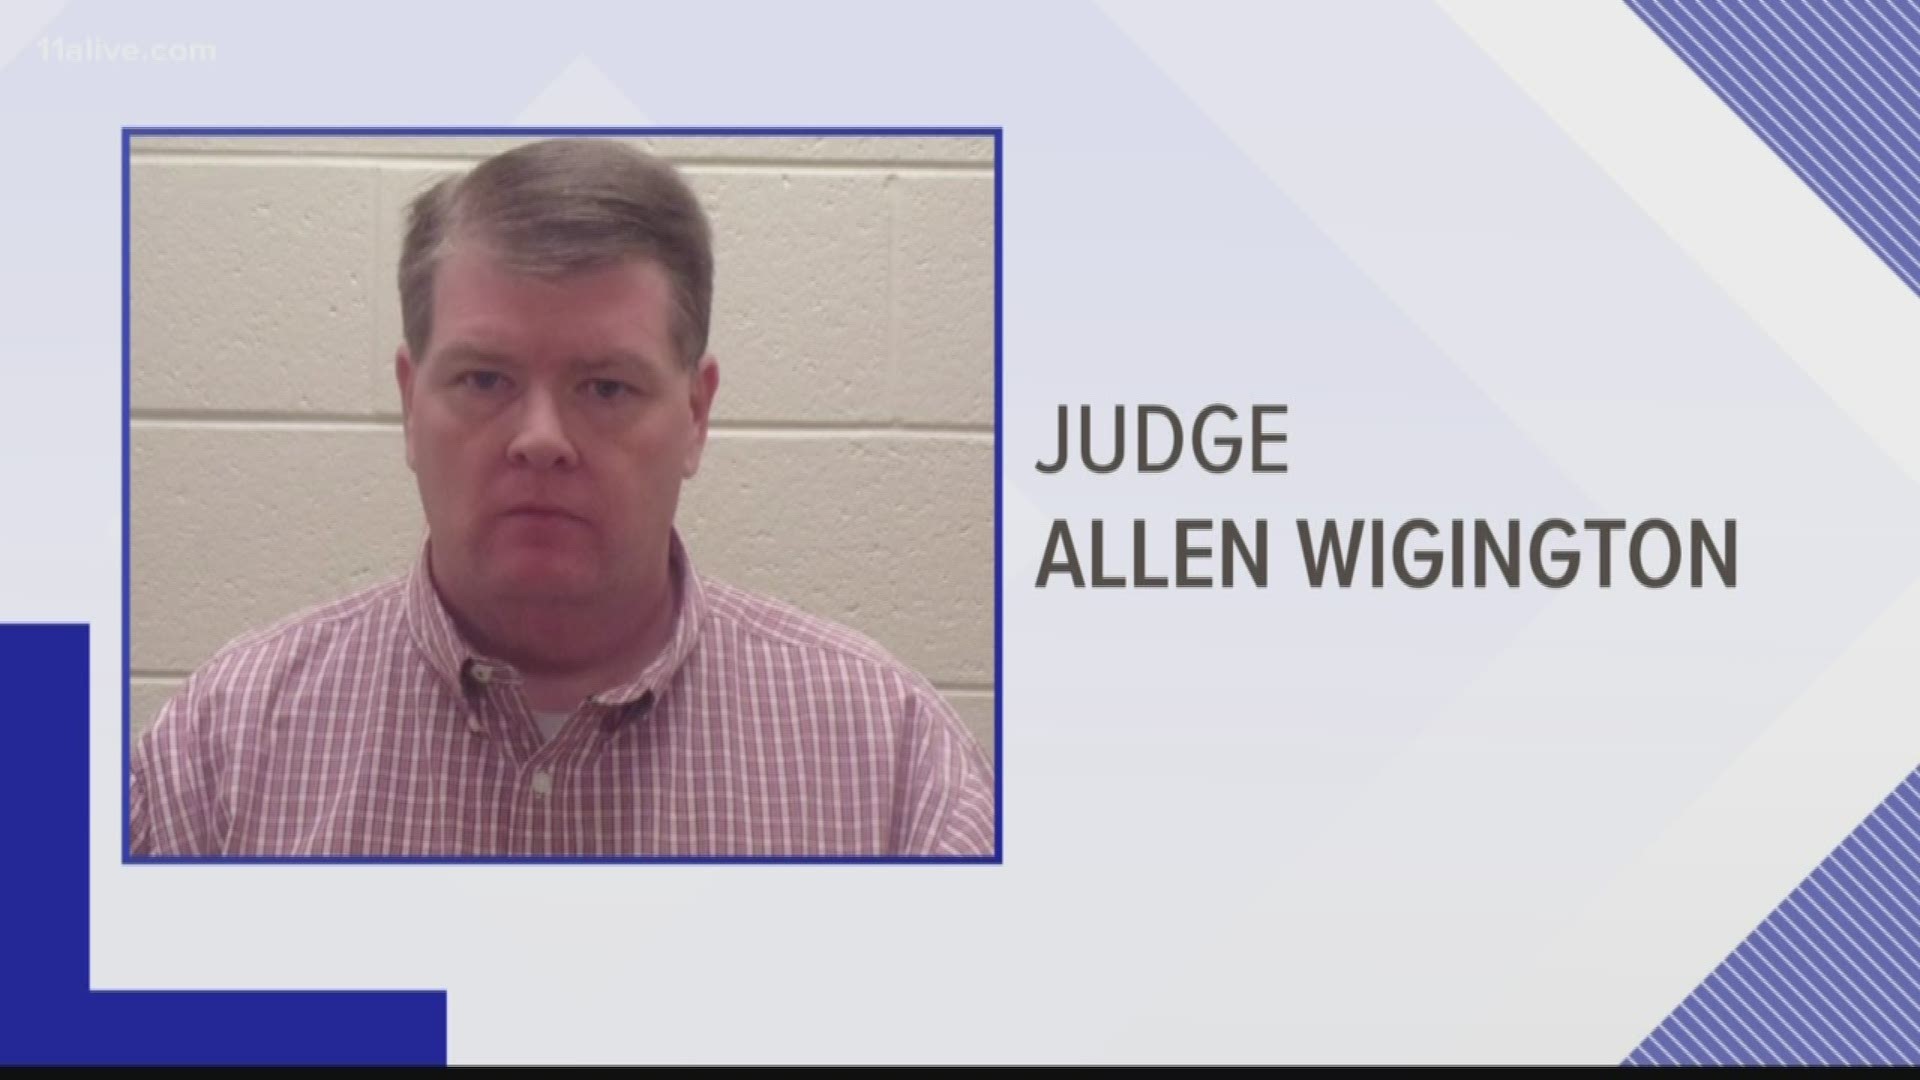 Pickens County Chief Magistrate Judge Allen Wigington arrested